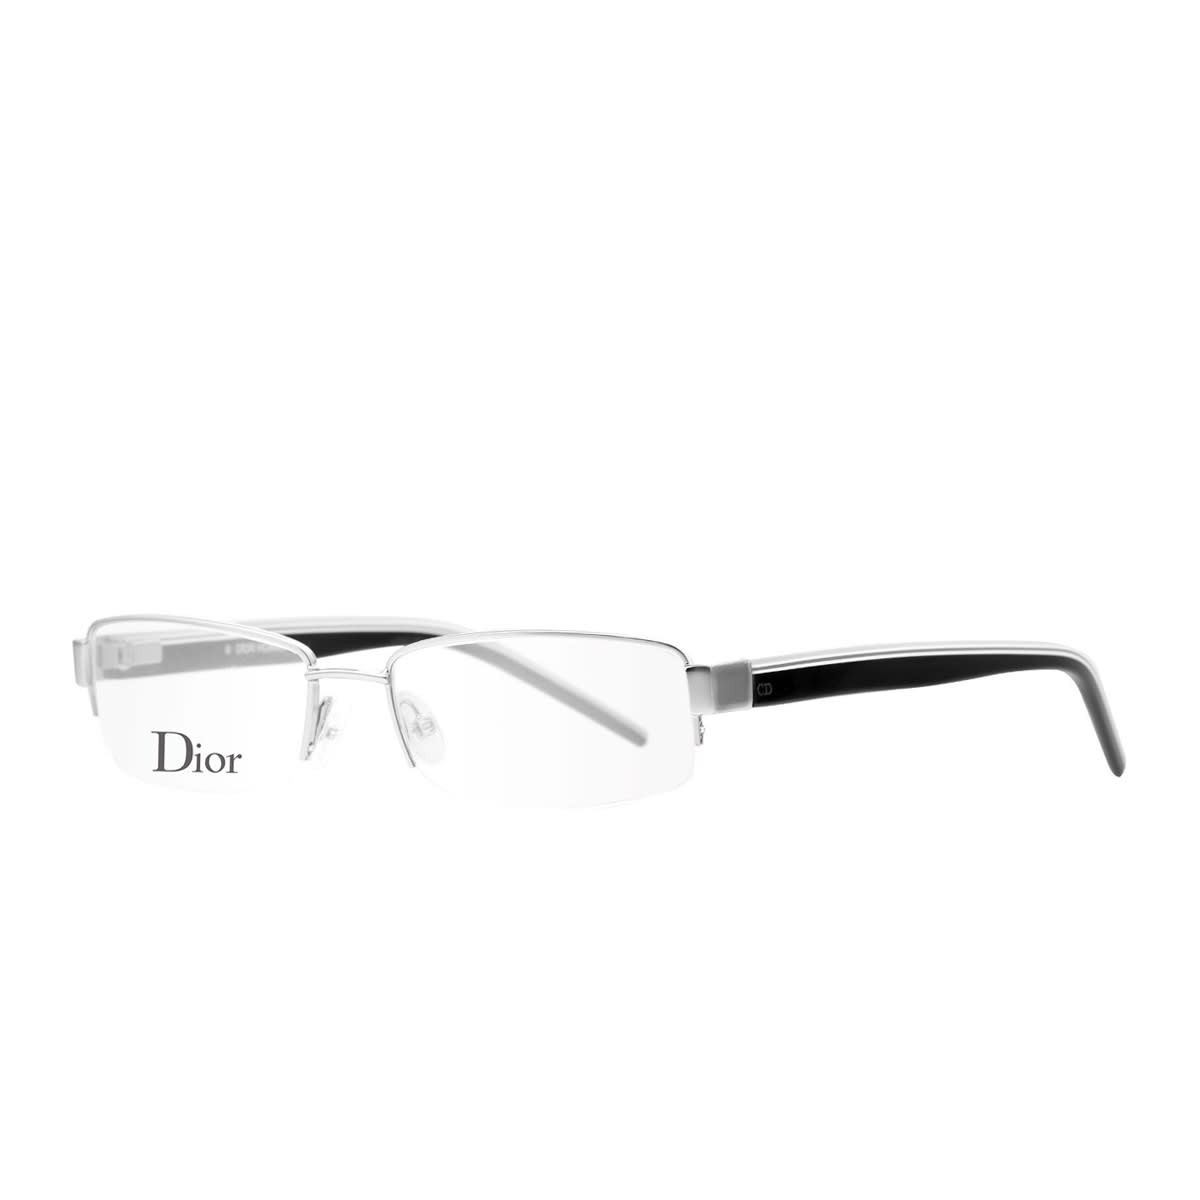 Dior Eyewear 136 Glasses